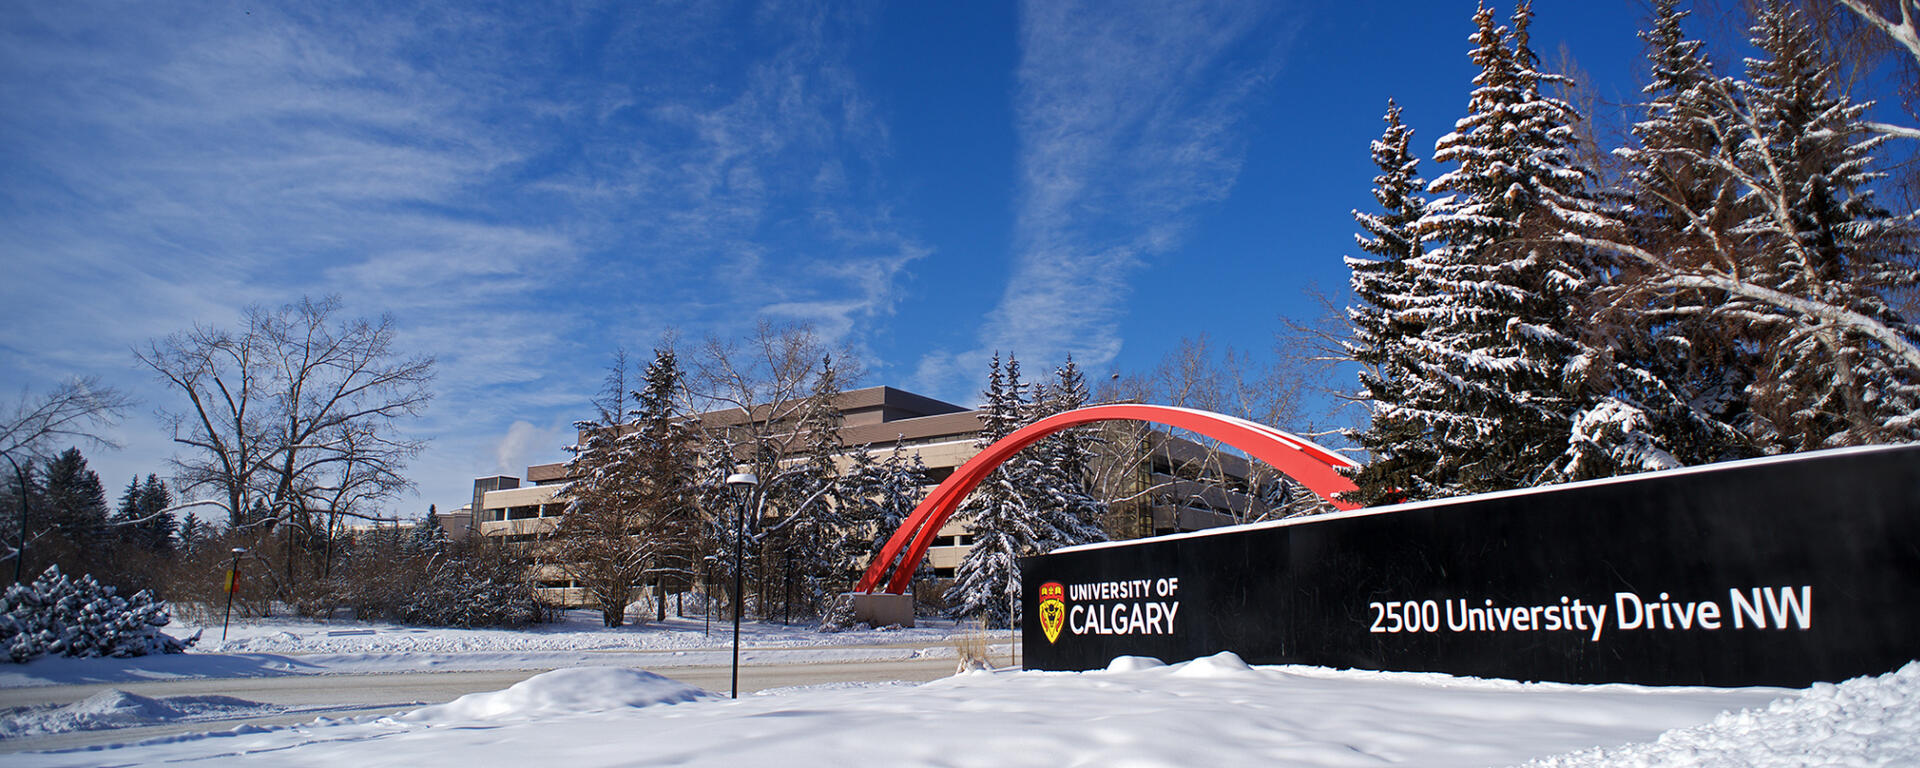 Image of University of Calgary campus